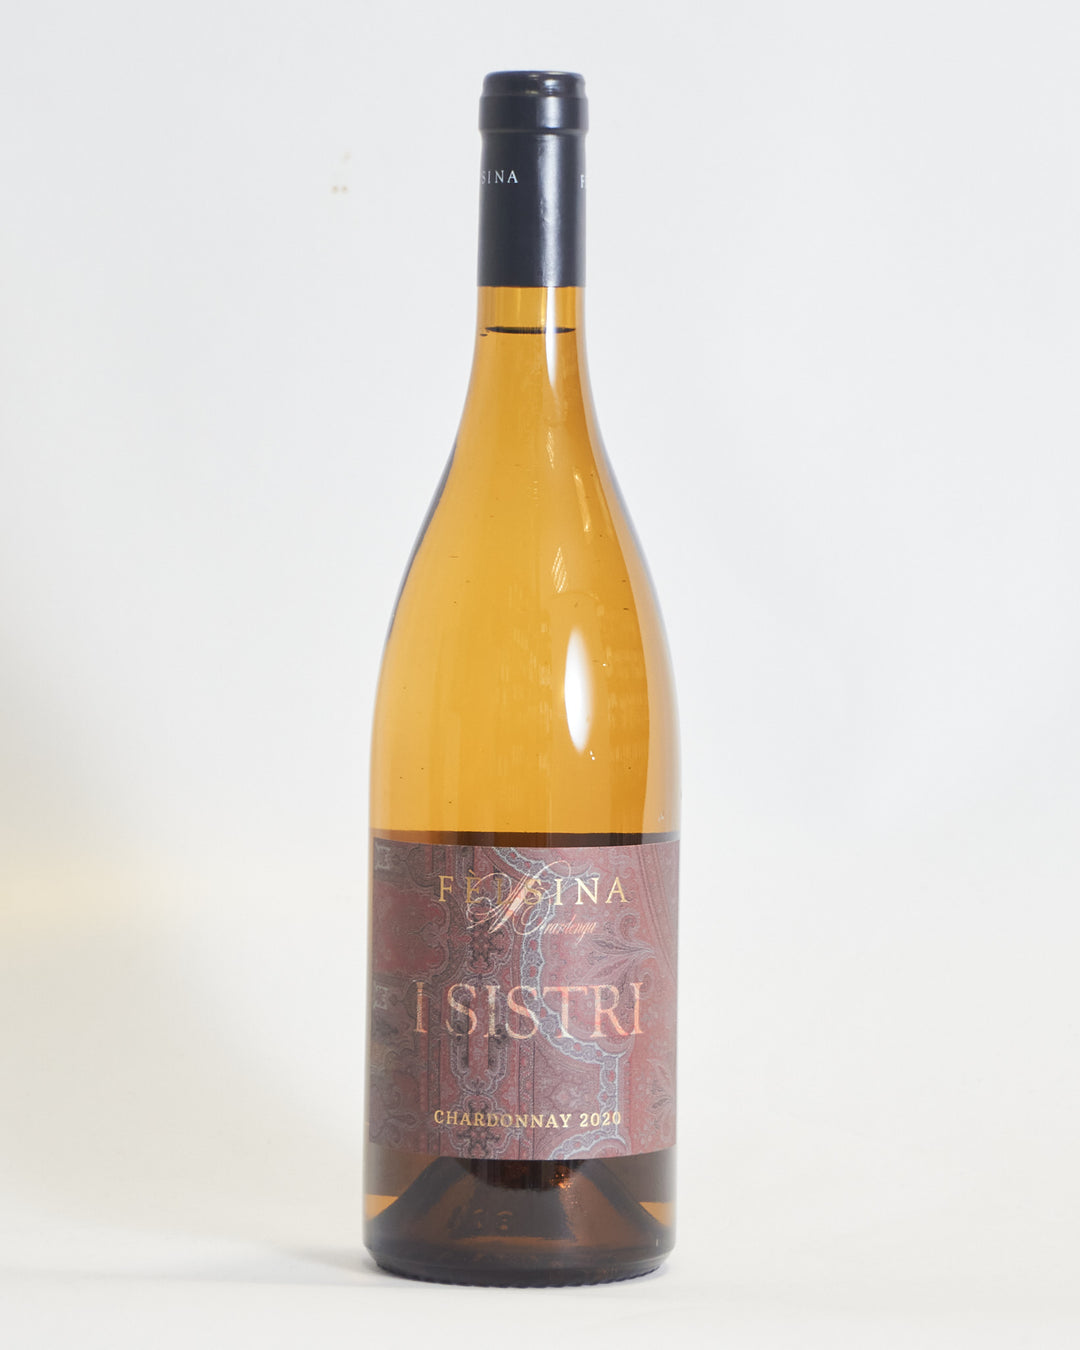 Felsina Barardenga 'I Sistri' Chardonnay 2020